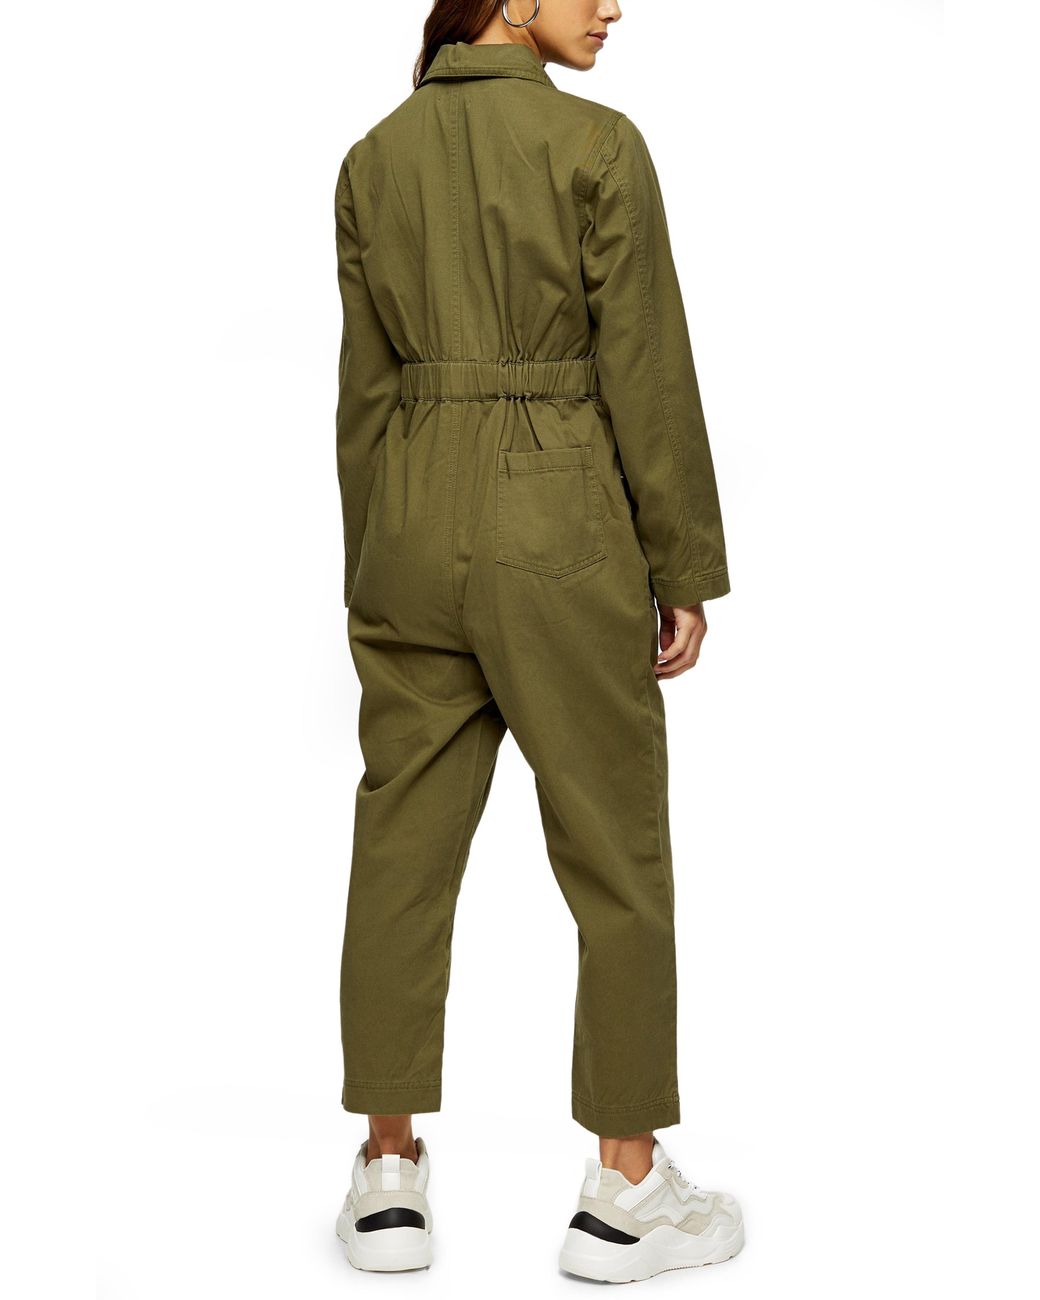 Topshop utility pocket casual jumpsuit in khaki